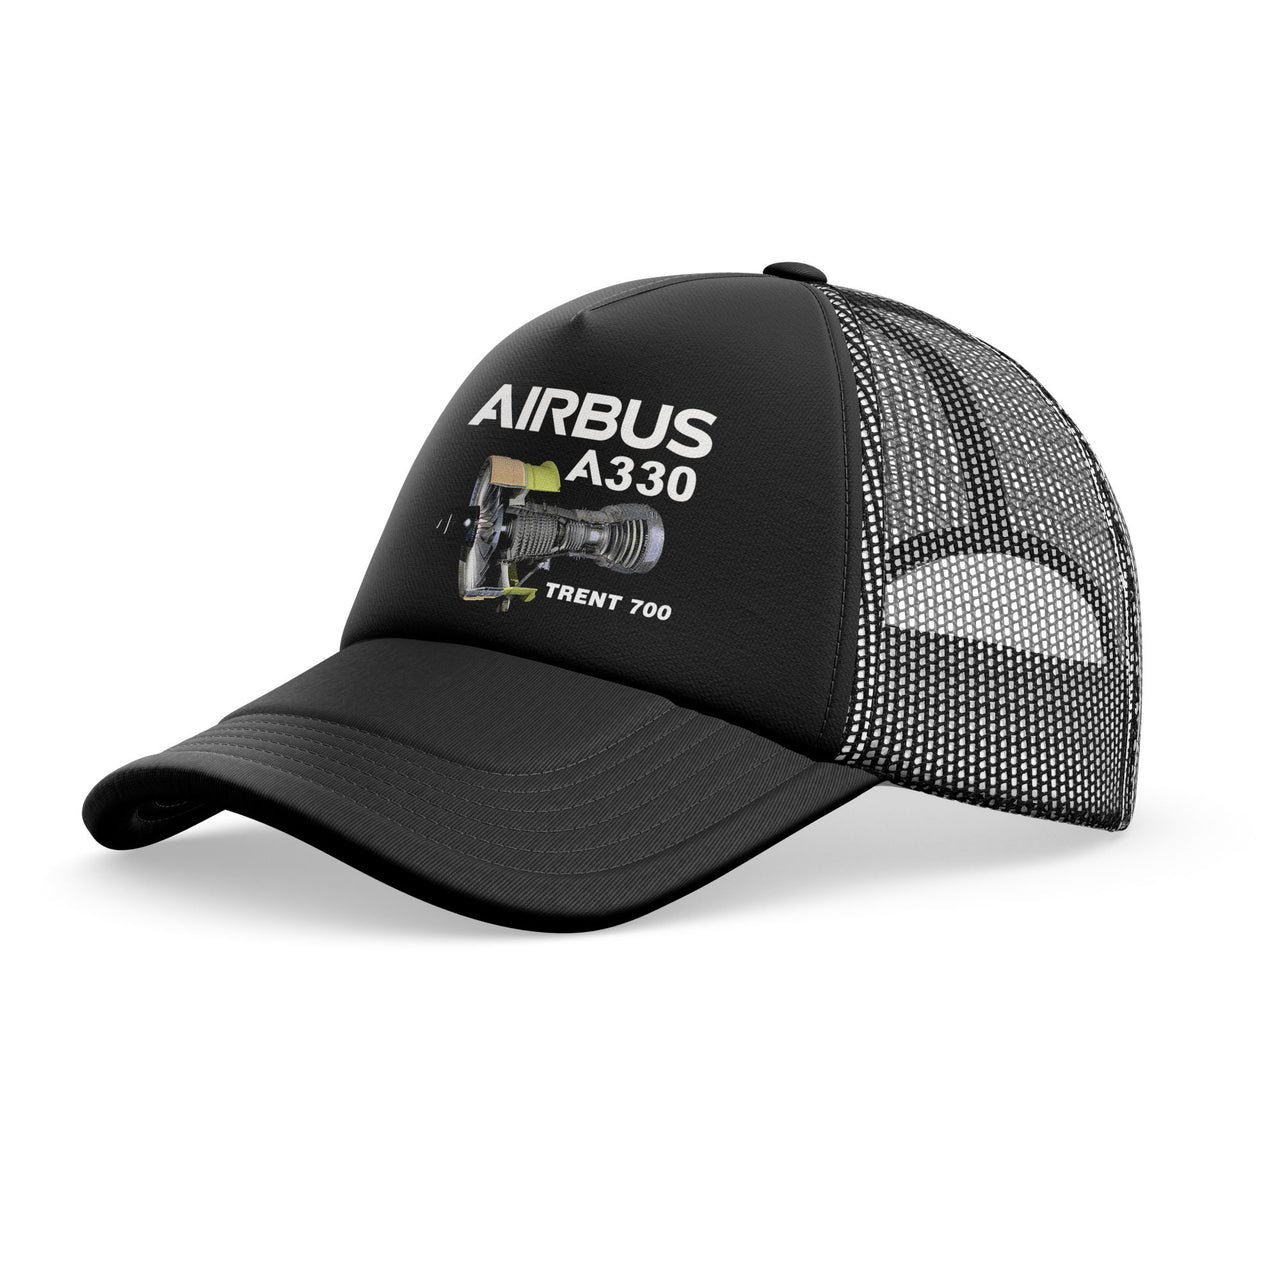 Airbus A330 & Trent 700 Engine Designed Trucker Caps & Hats